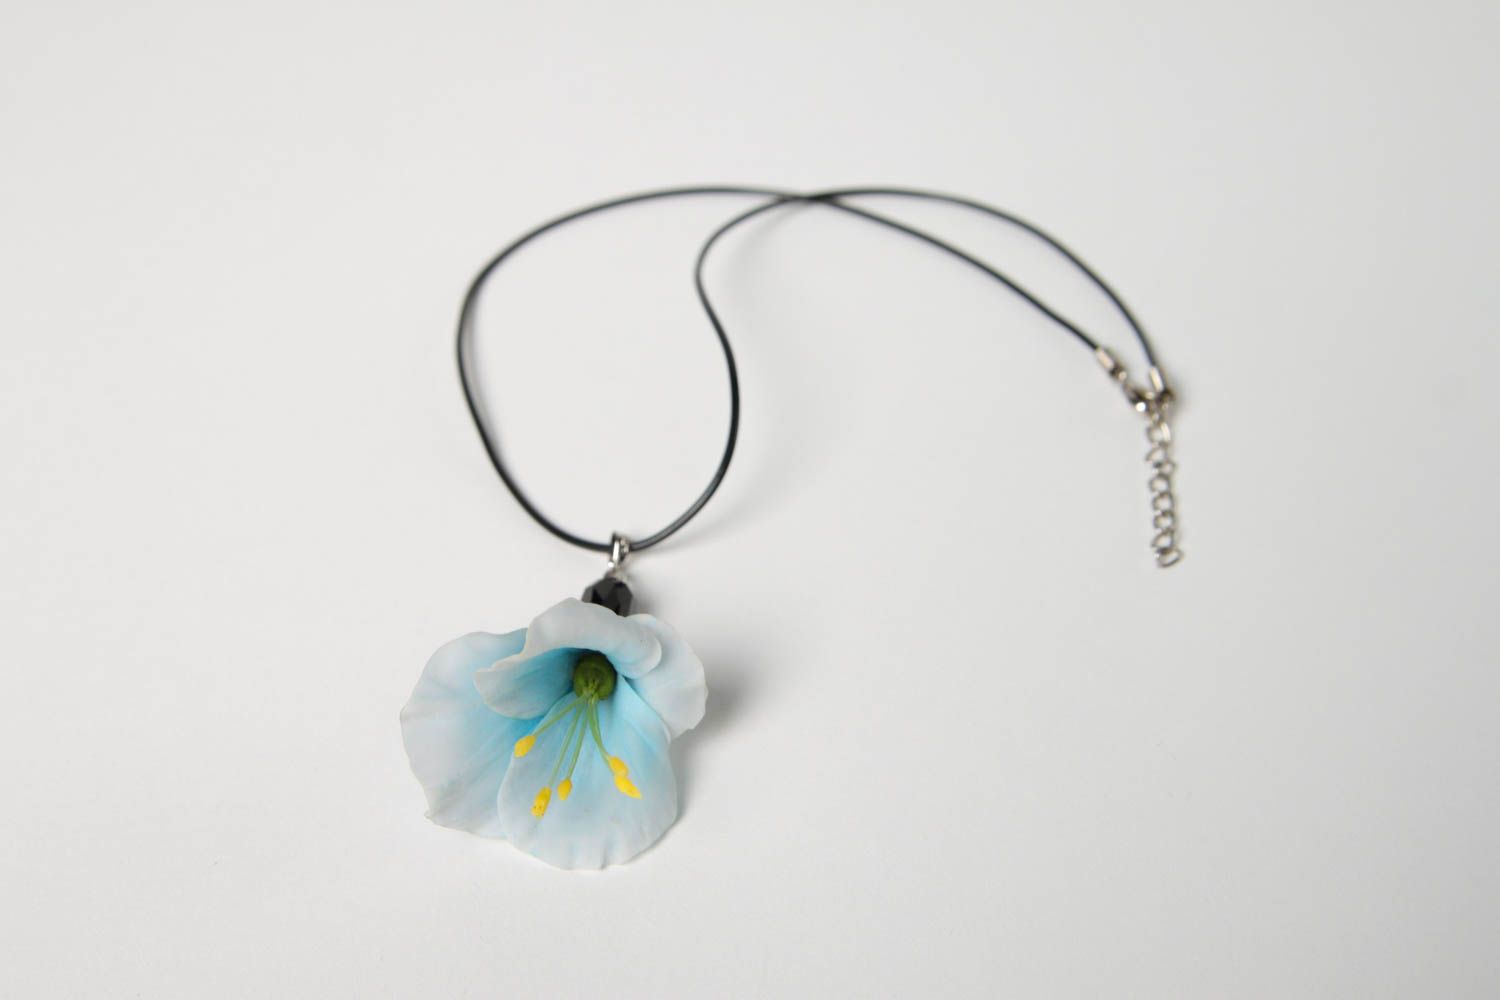 Handmade pendant designer pendant for girls clay pendant unusual accessory photo 2